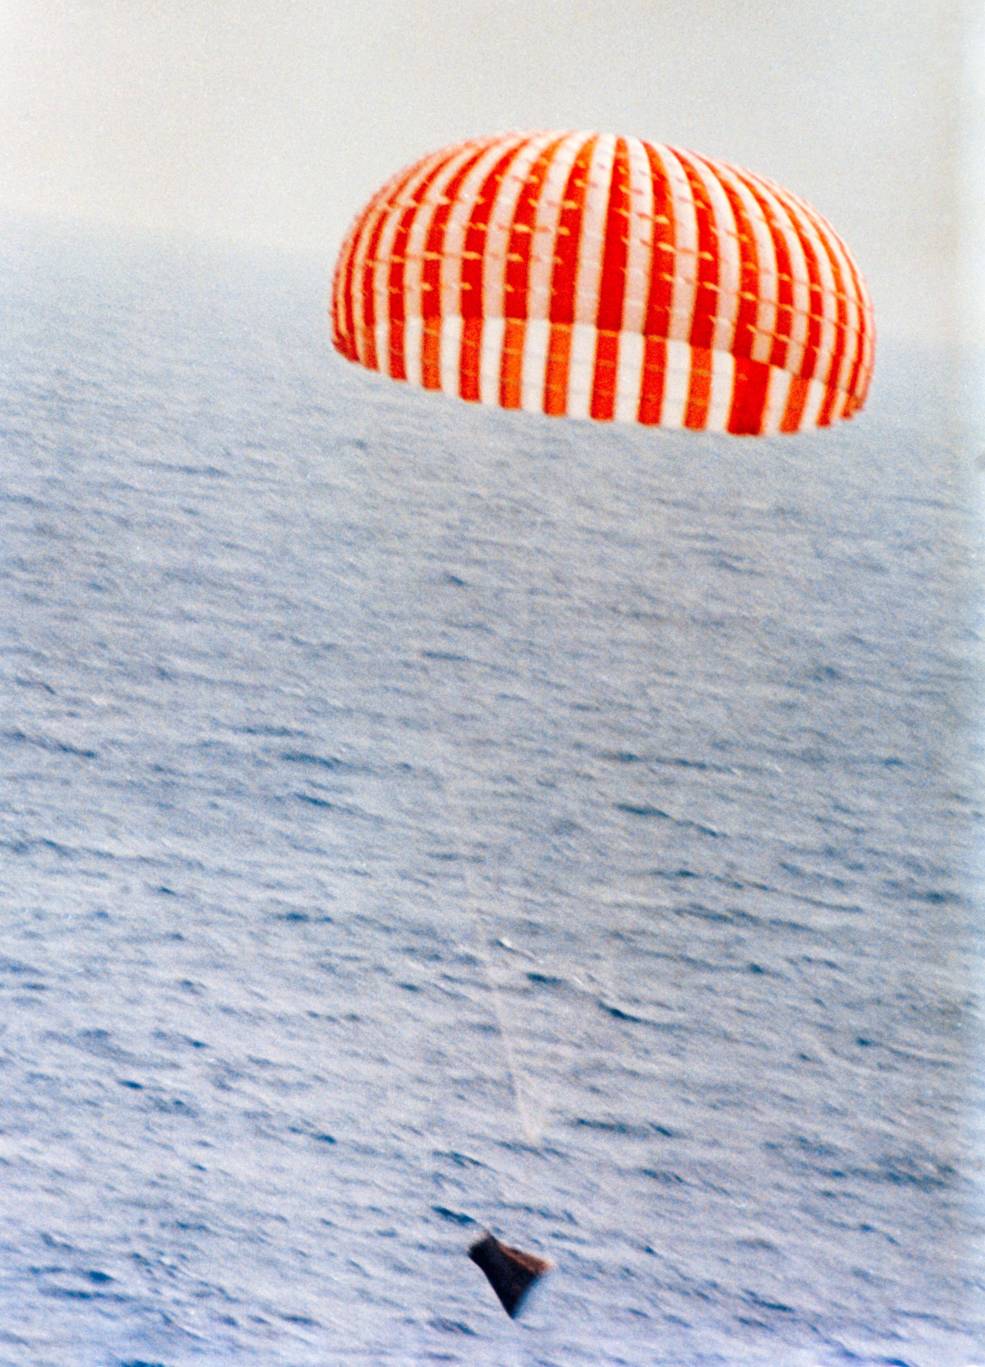 gemini_ix_18_on_parachute